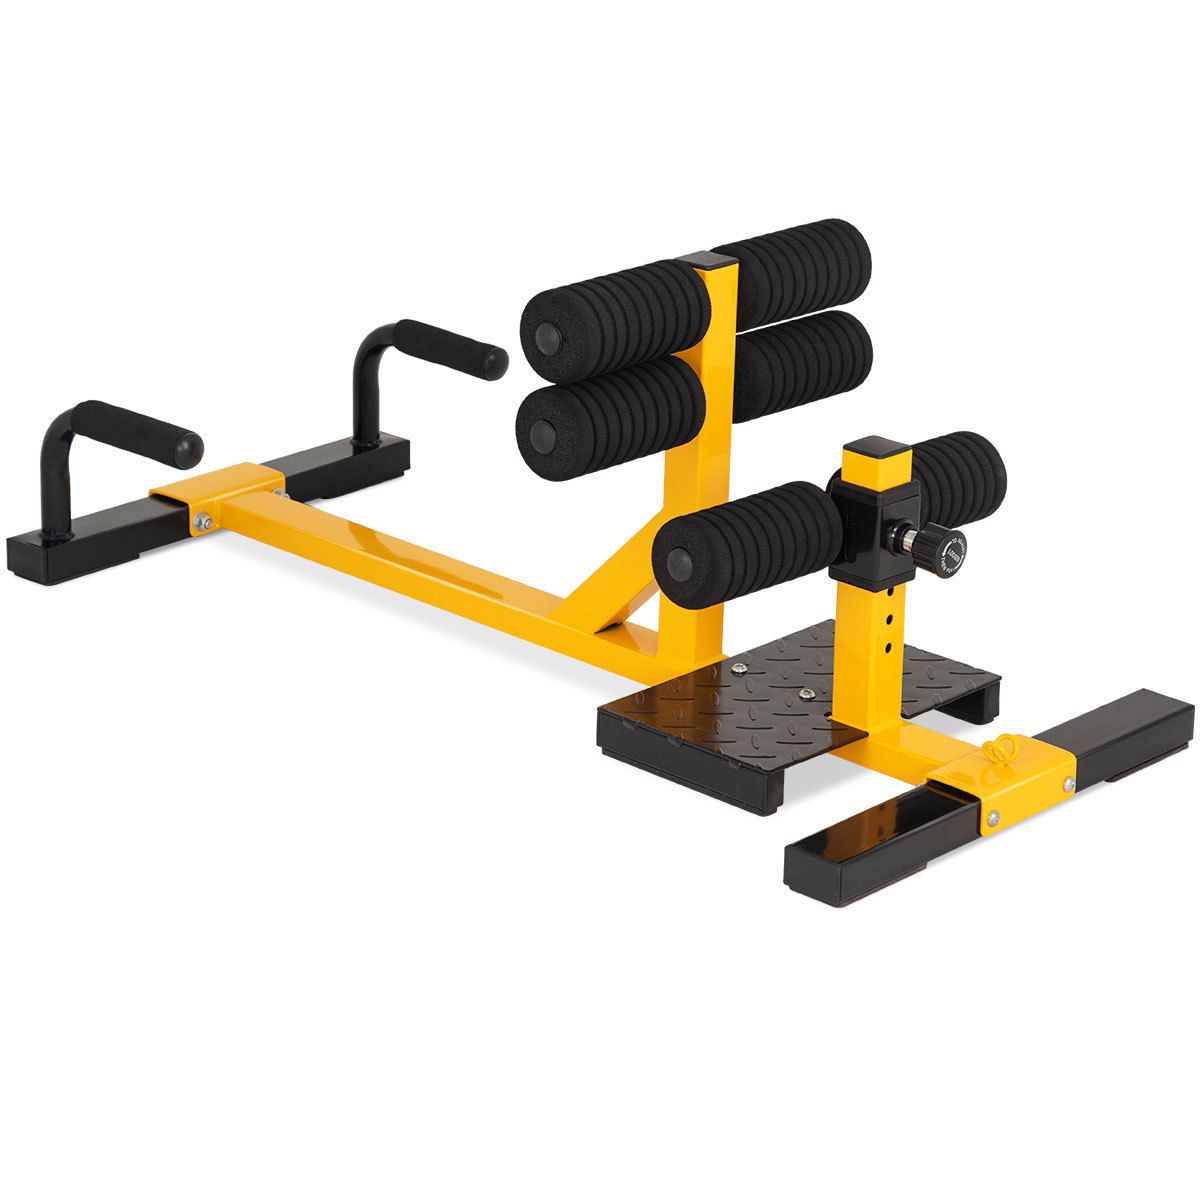 Sissy Squat Machine 8 in 1, Multifunctional Squat Machine Home Gym  Equipment for Leg Strength Training, Sit-Up, Push-Up & Plank, Black